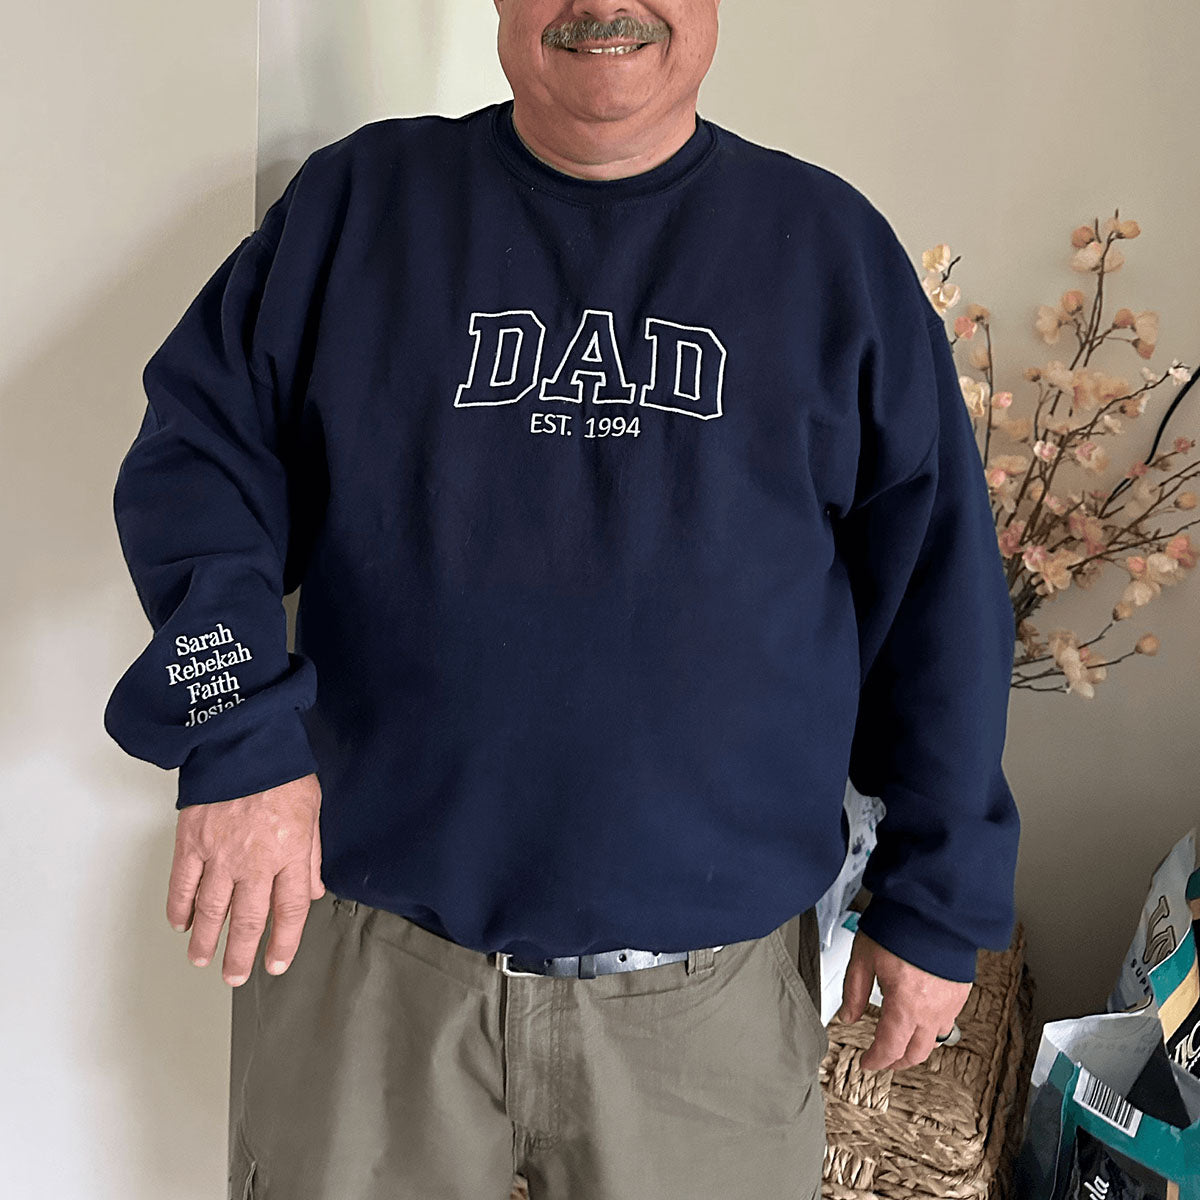 Dad sweatshirt embroidered